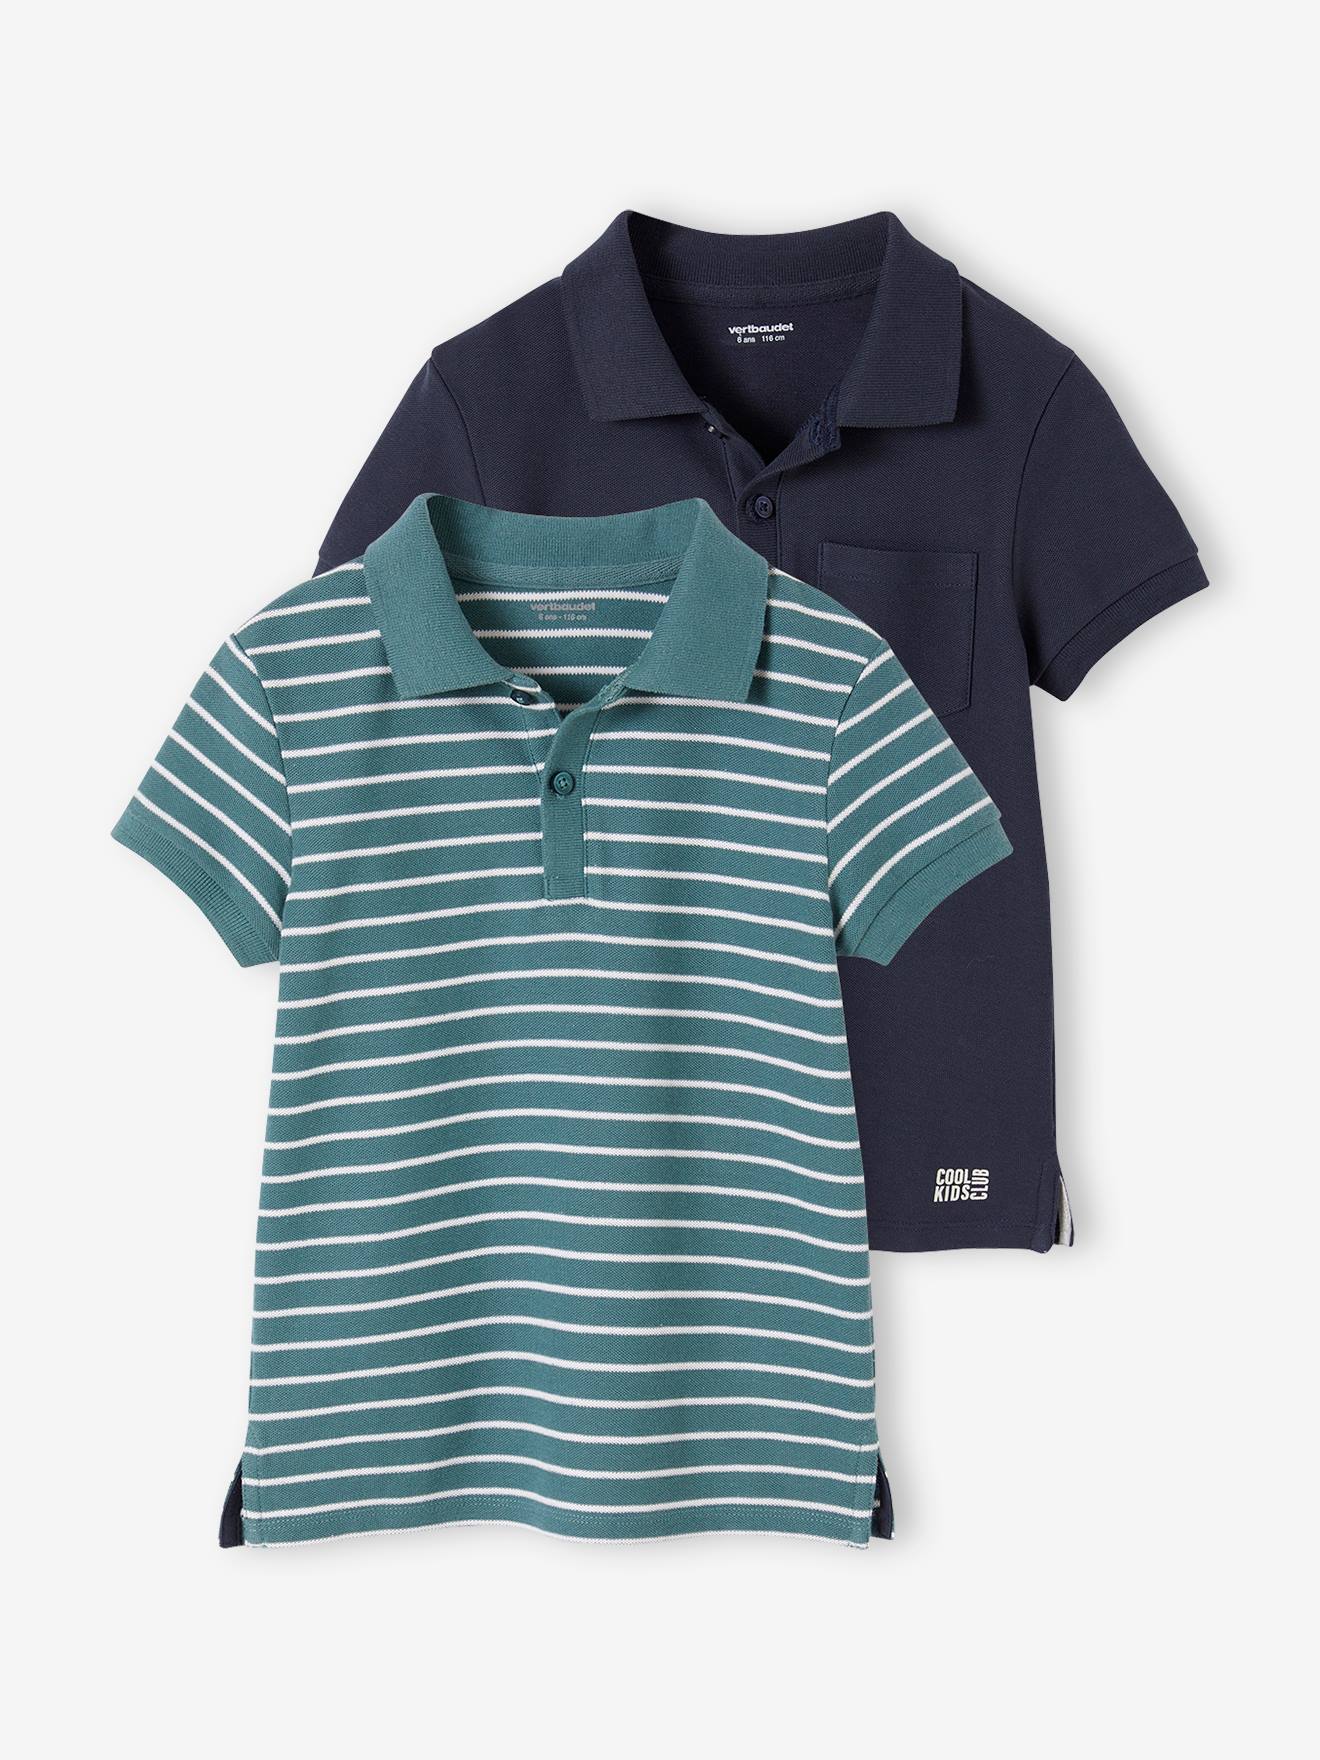 Set of 2 Pique Knit Polo Shirts for Boys aqua green